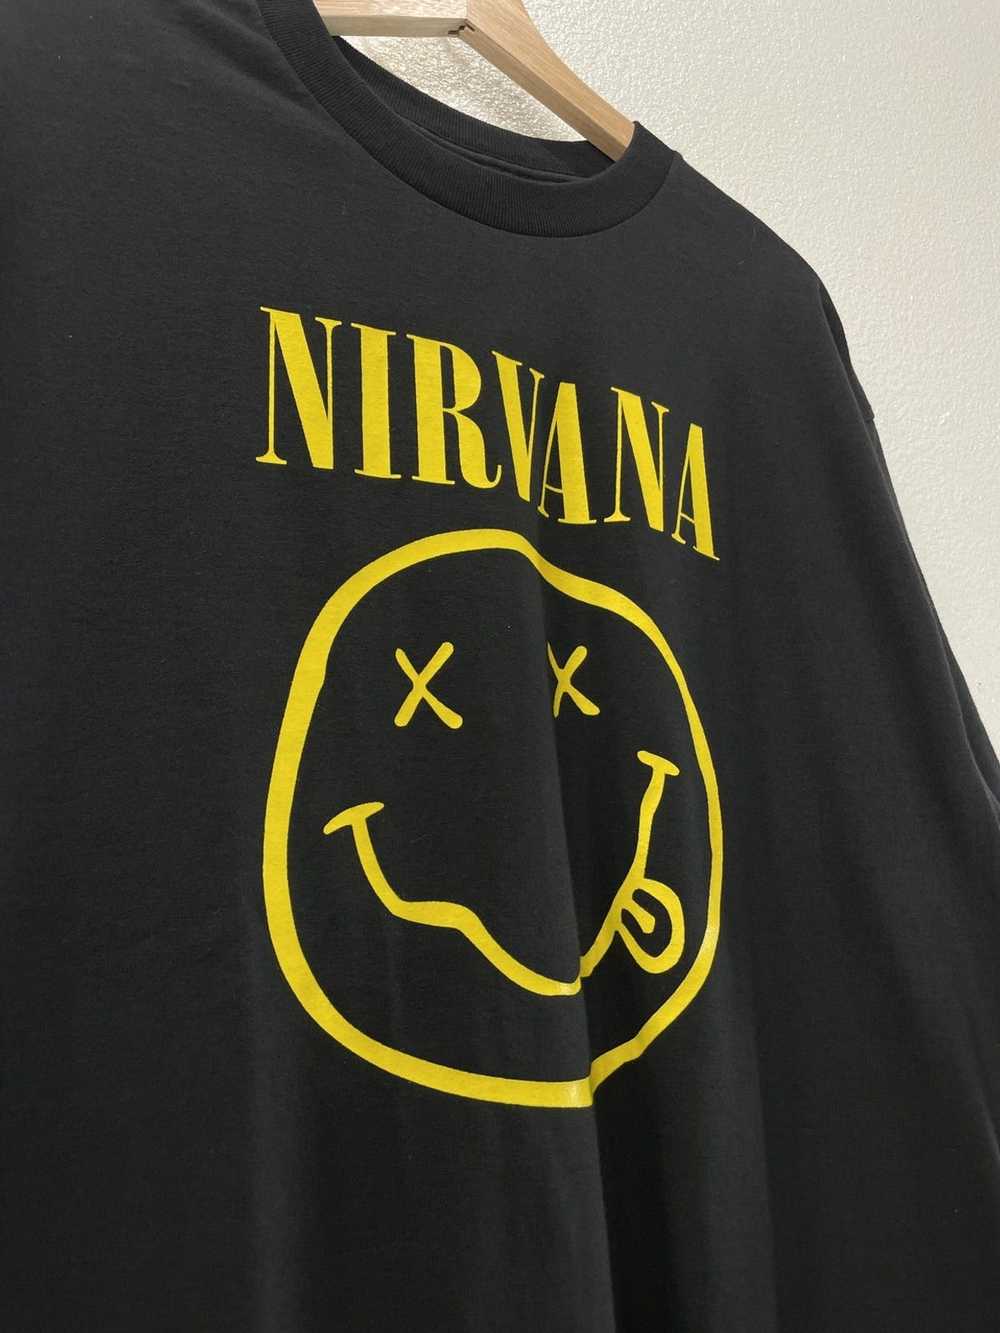 Vintage Vintage 2k Nirvana Band Tee - image 3